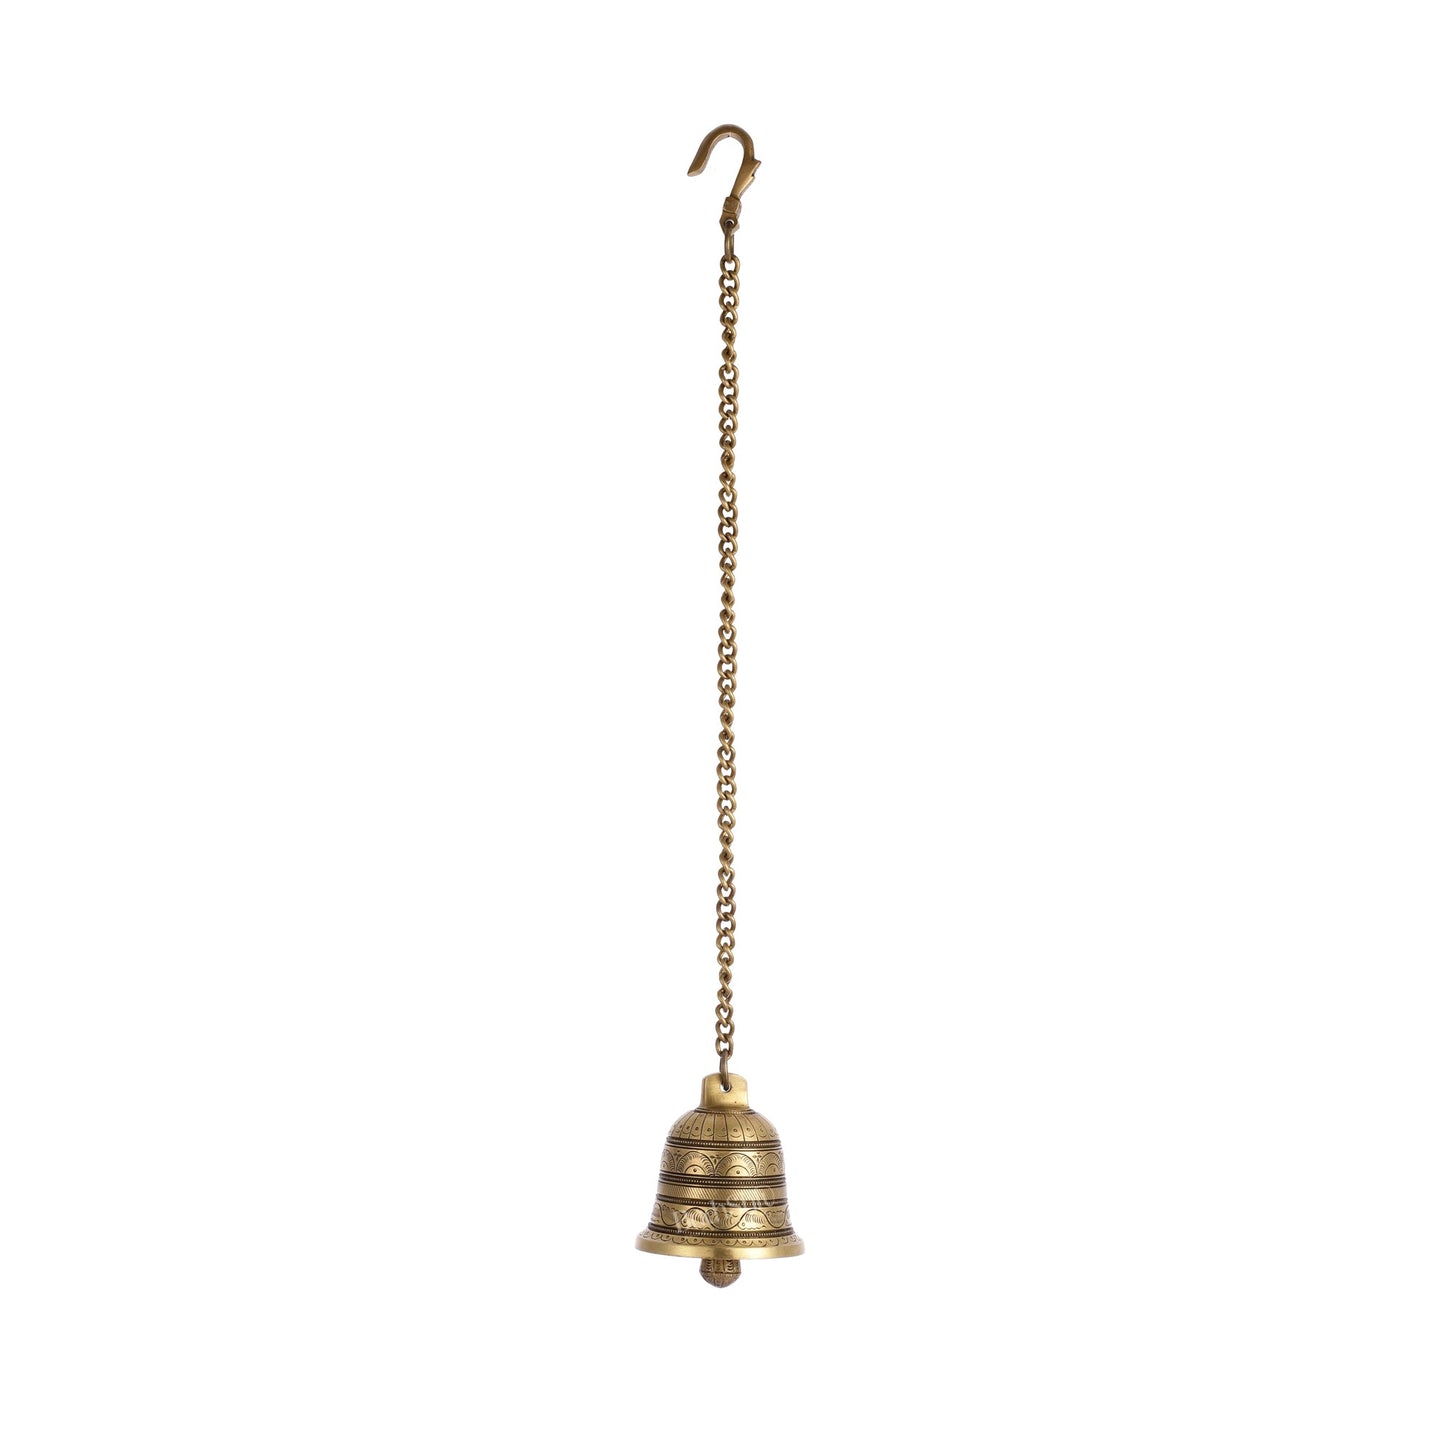 Brass Engraved hanging bell 4 inch diameter - Budhshiv.com